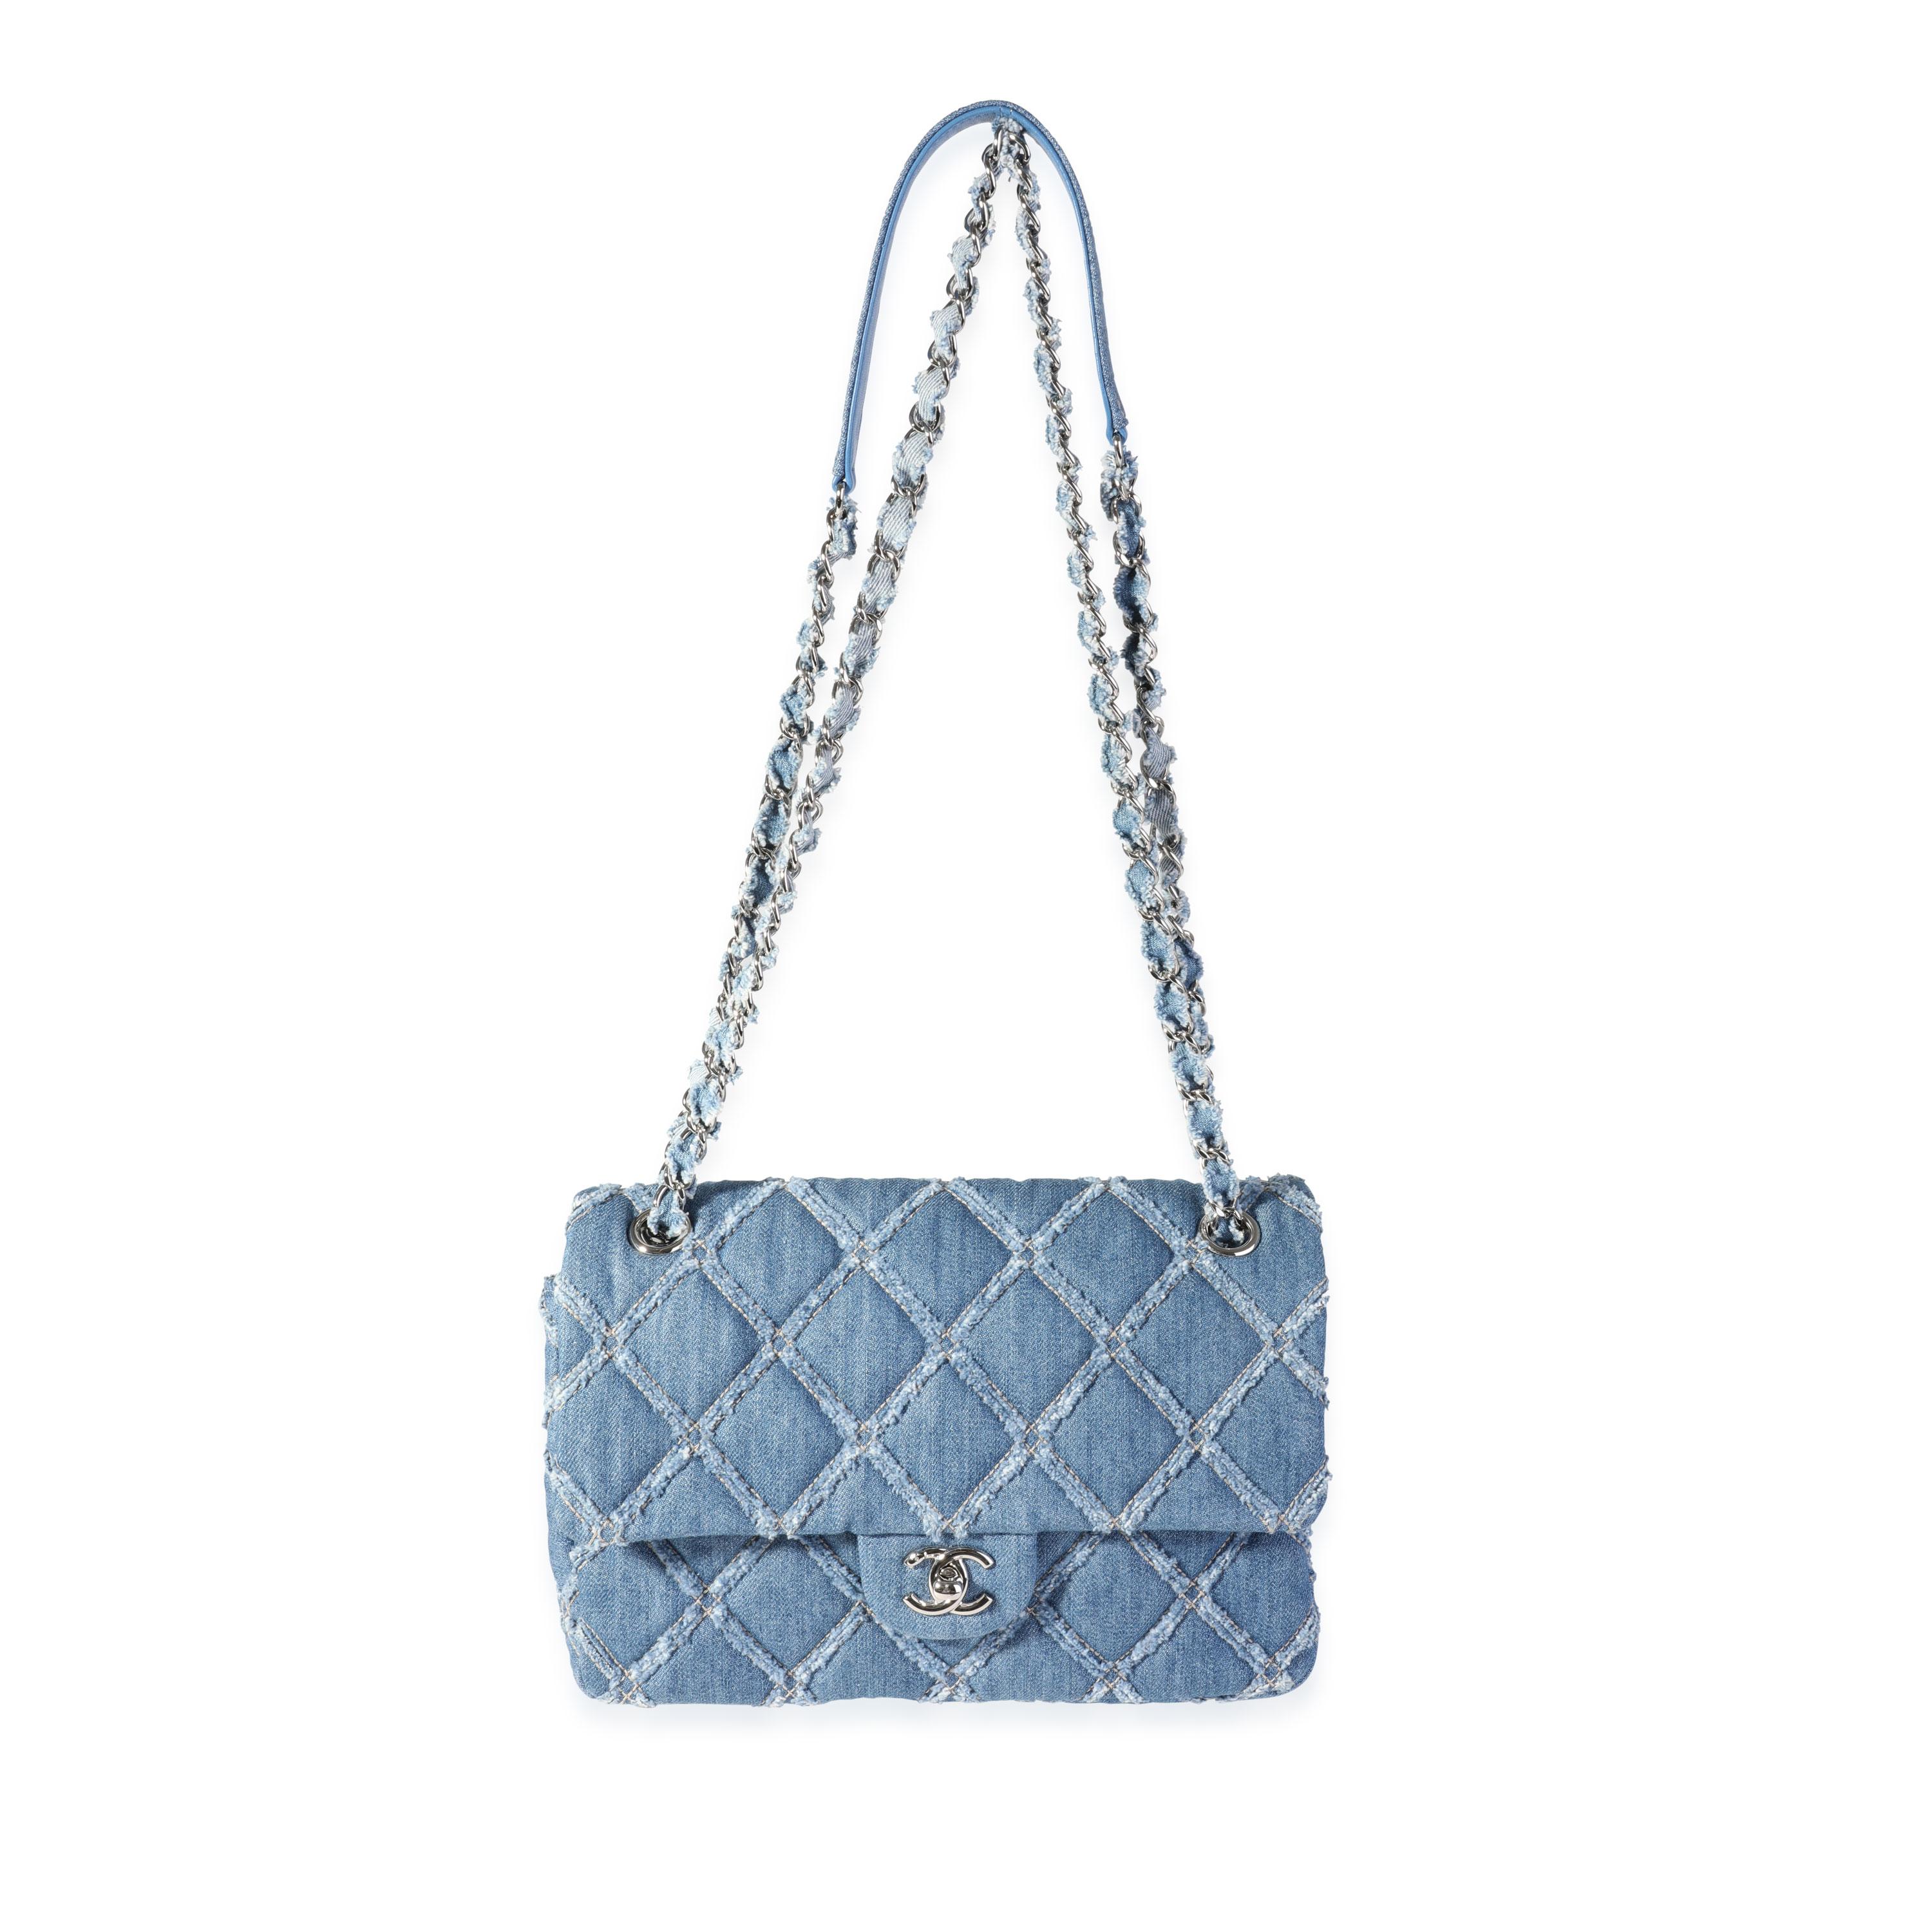 Listing Title: Chanel Blue Quilted Denim Medium Single Flap Bag
SKU: 119435
Condition: Pre-owned (3000)
Handbag Condition: Never Worn
Brand: Chanel
Model: Blue Quilted Denim Medium Flap Bag
Origin Country: France
Handbag Silhouette: Shoulder